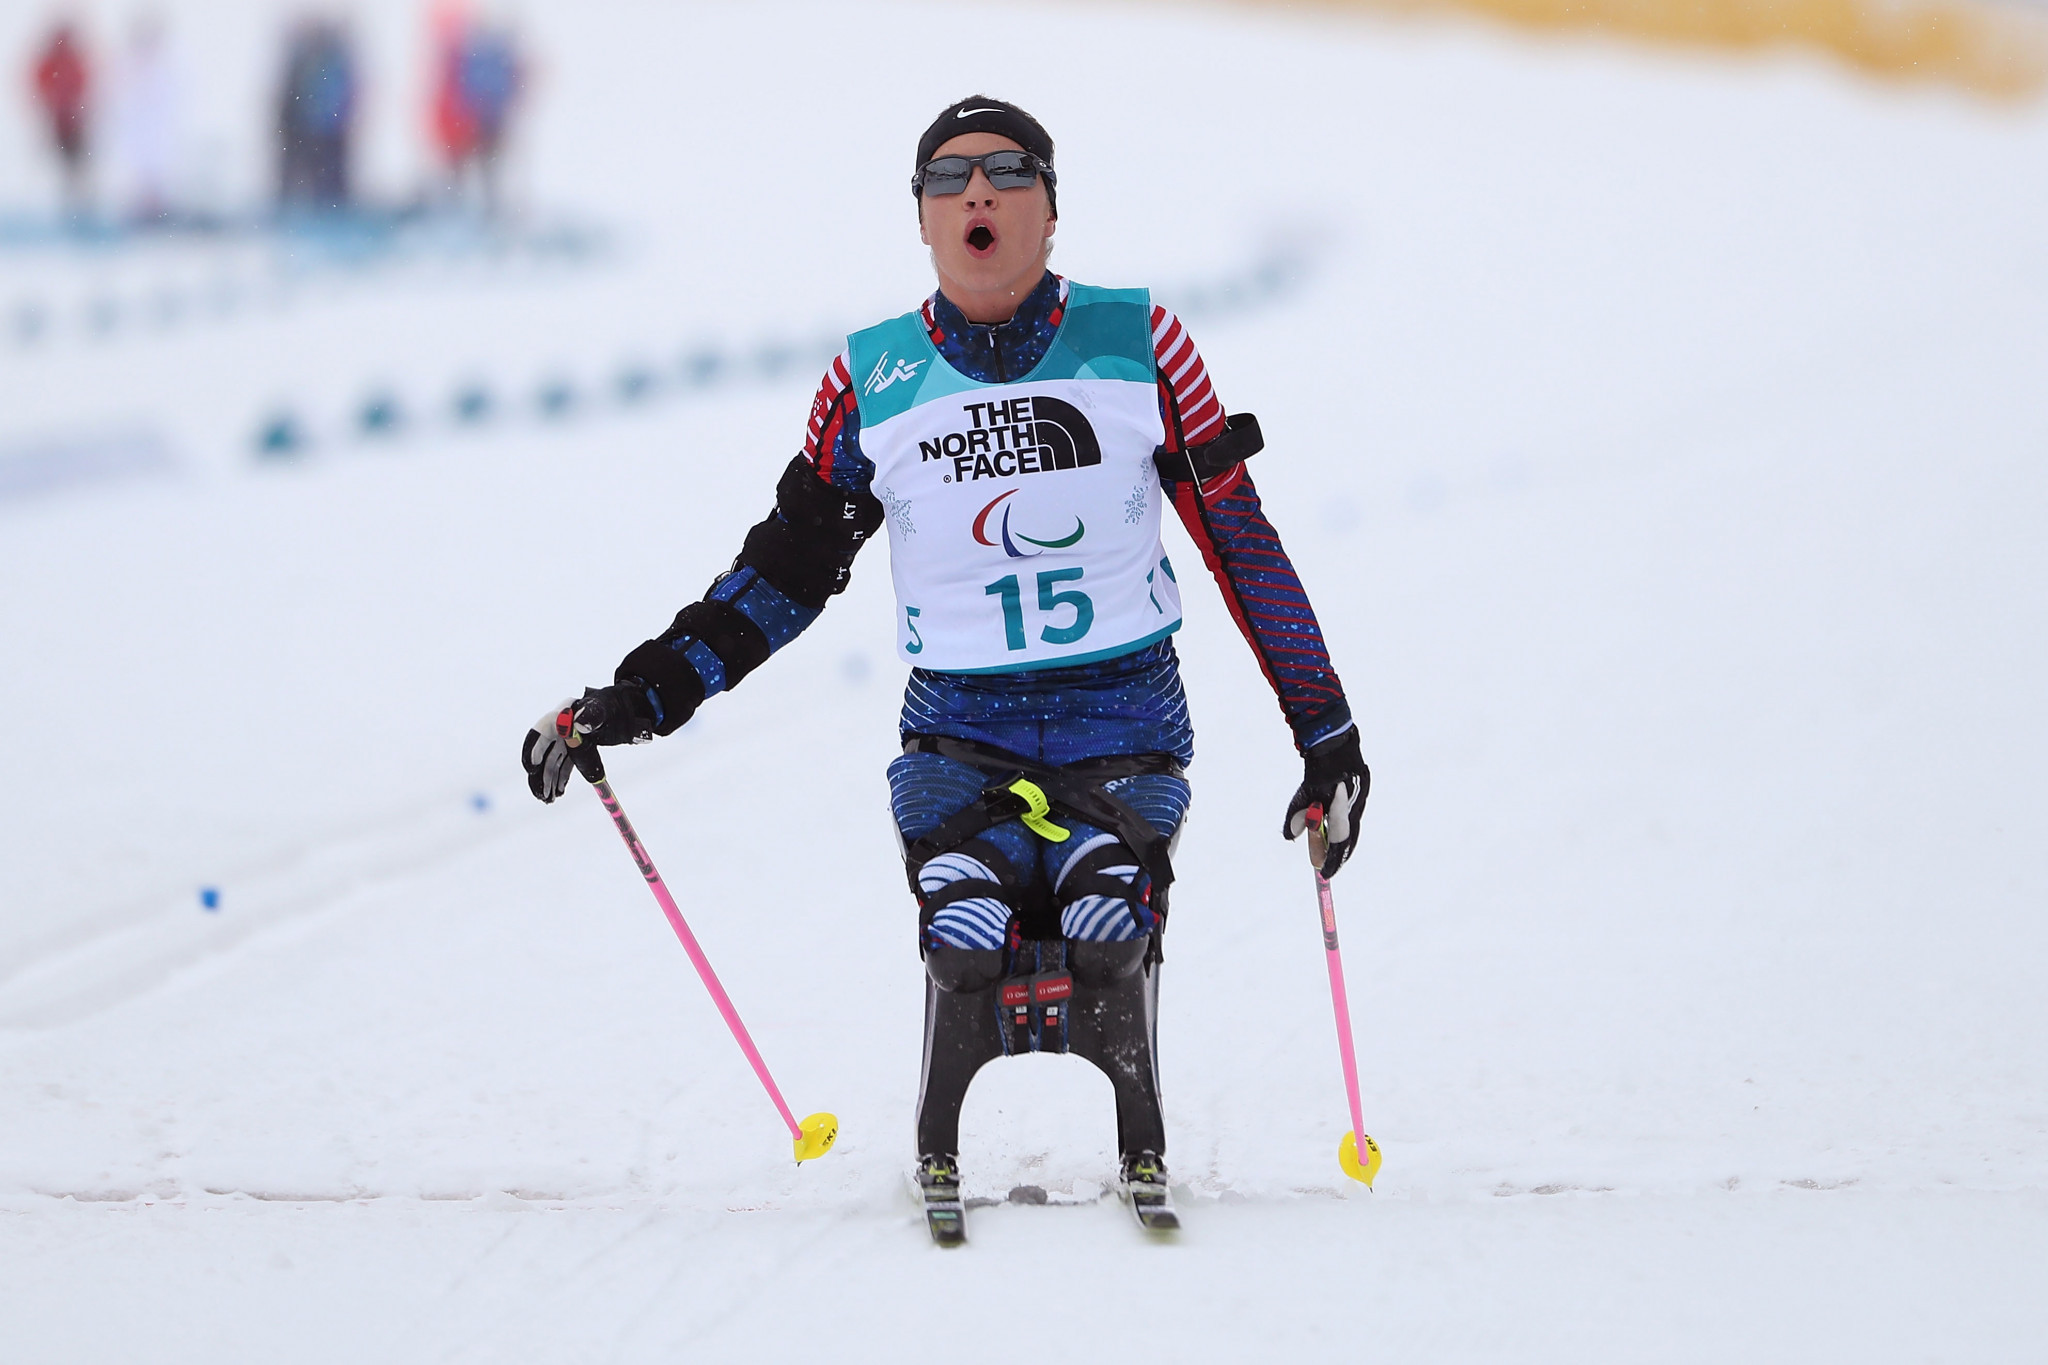 Paralympic champion Masters earns gold at World Para Nordic Skiing World Cup